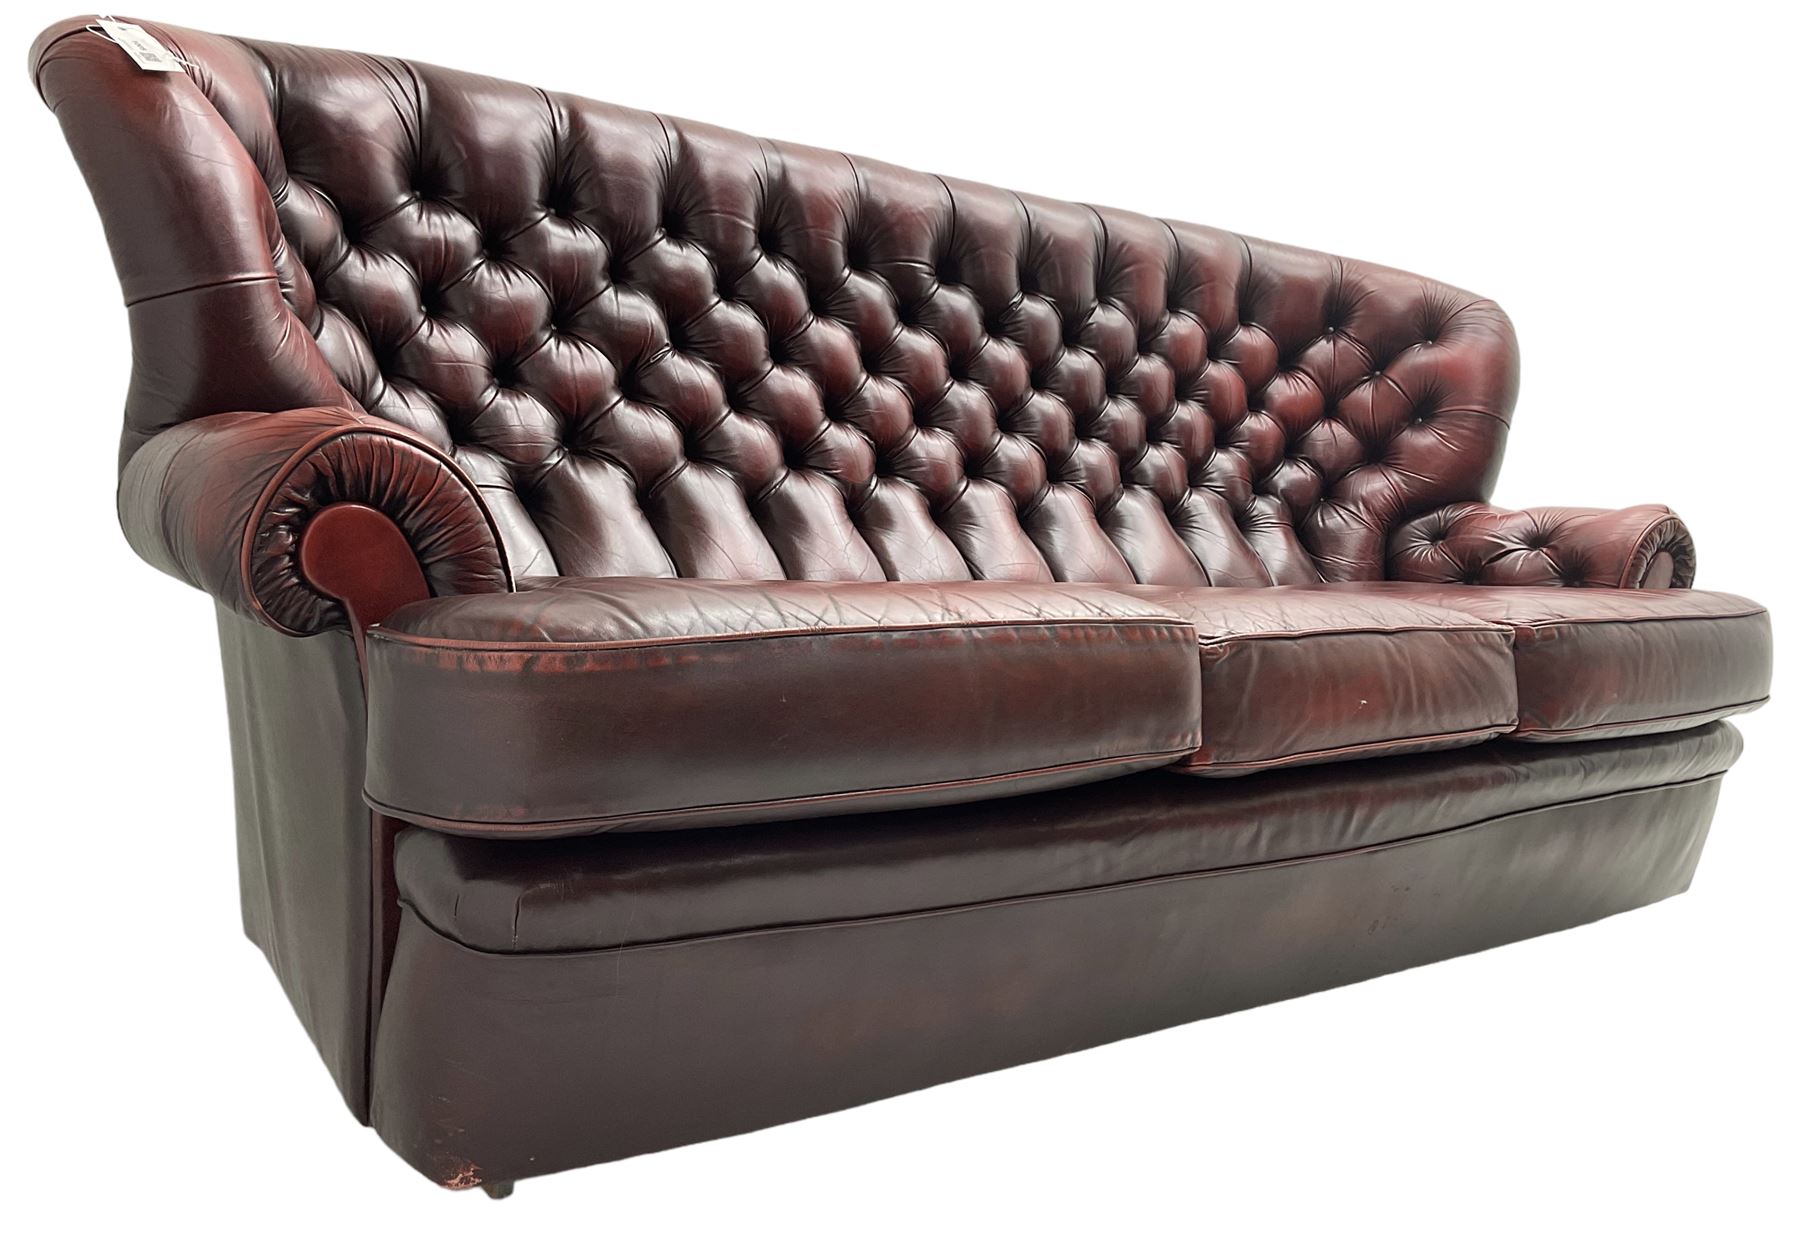 Wade - Georgian design three-seat sofa - Image 4 of 8